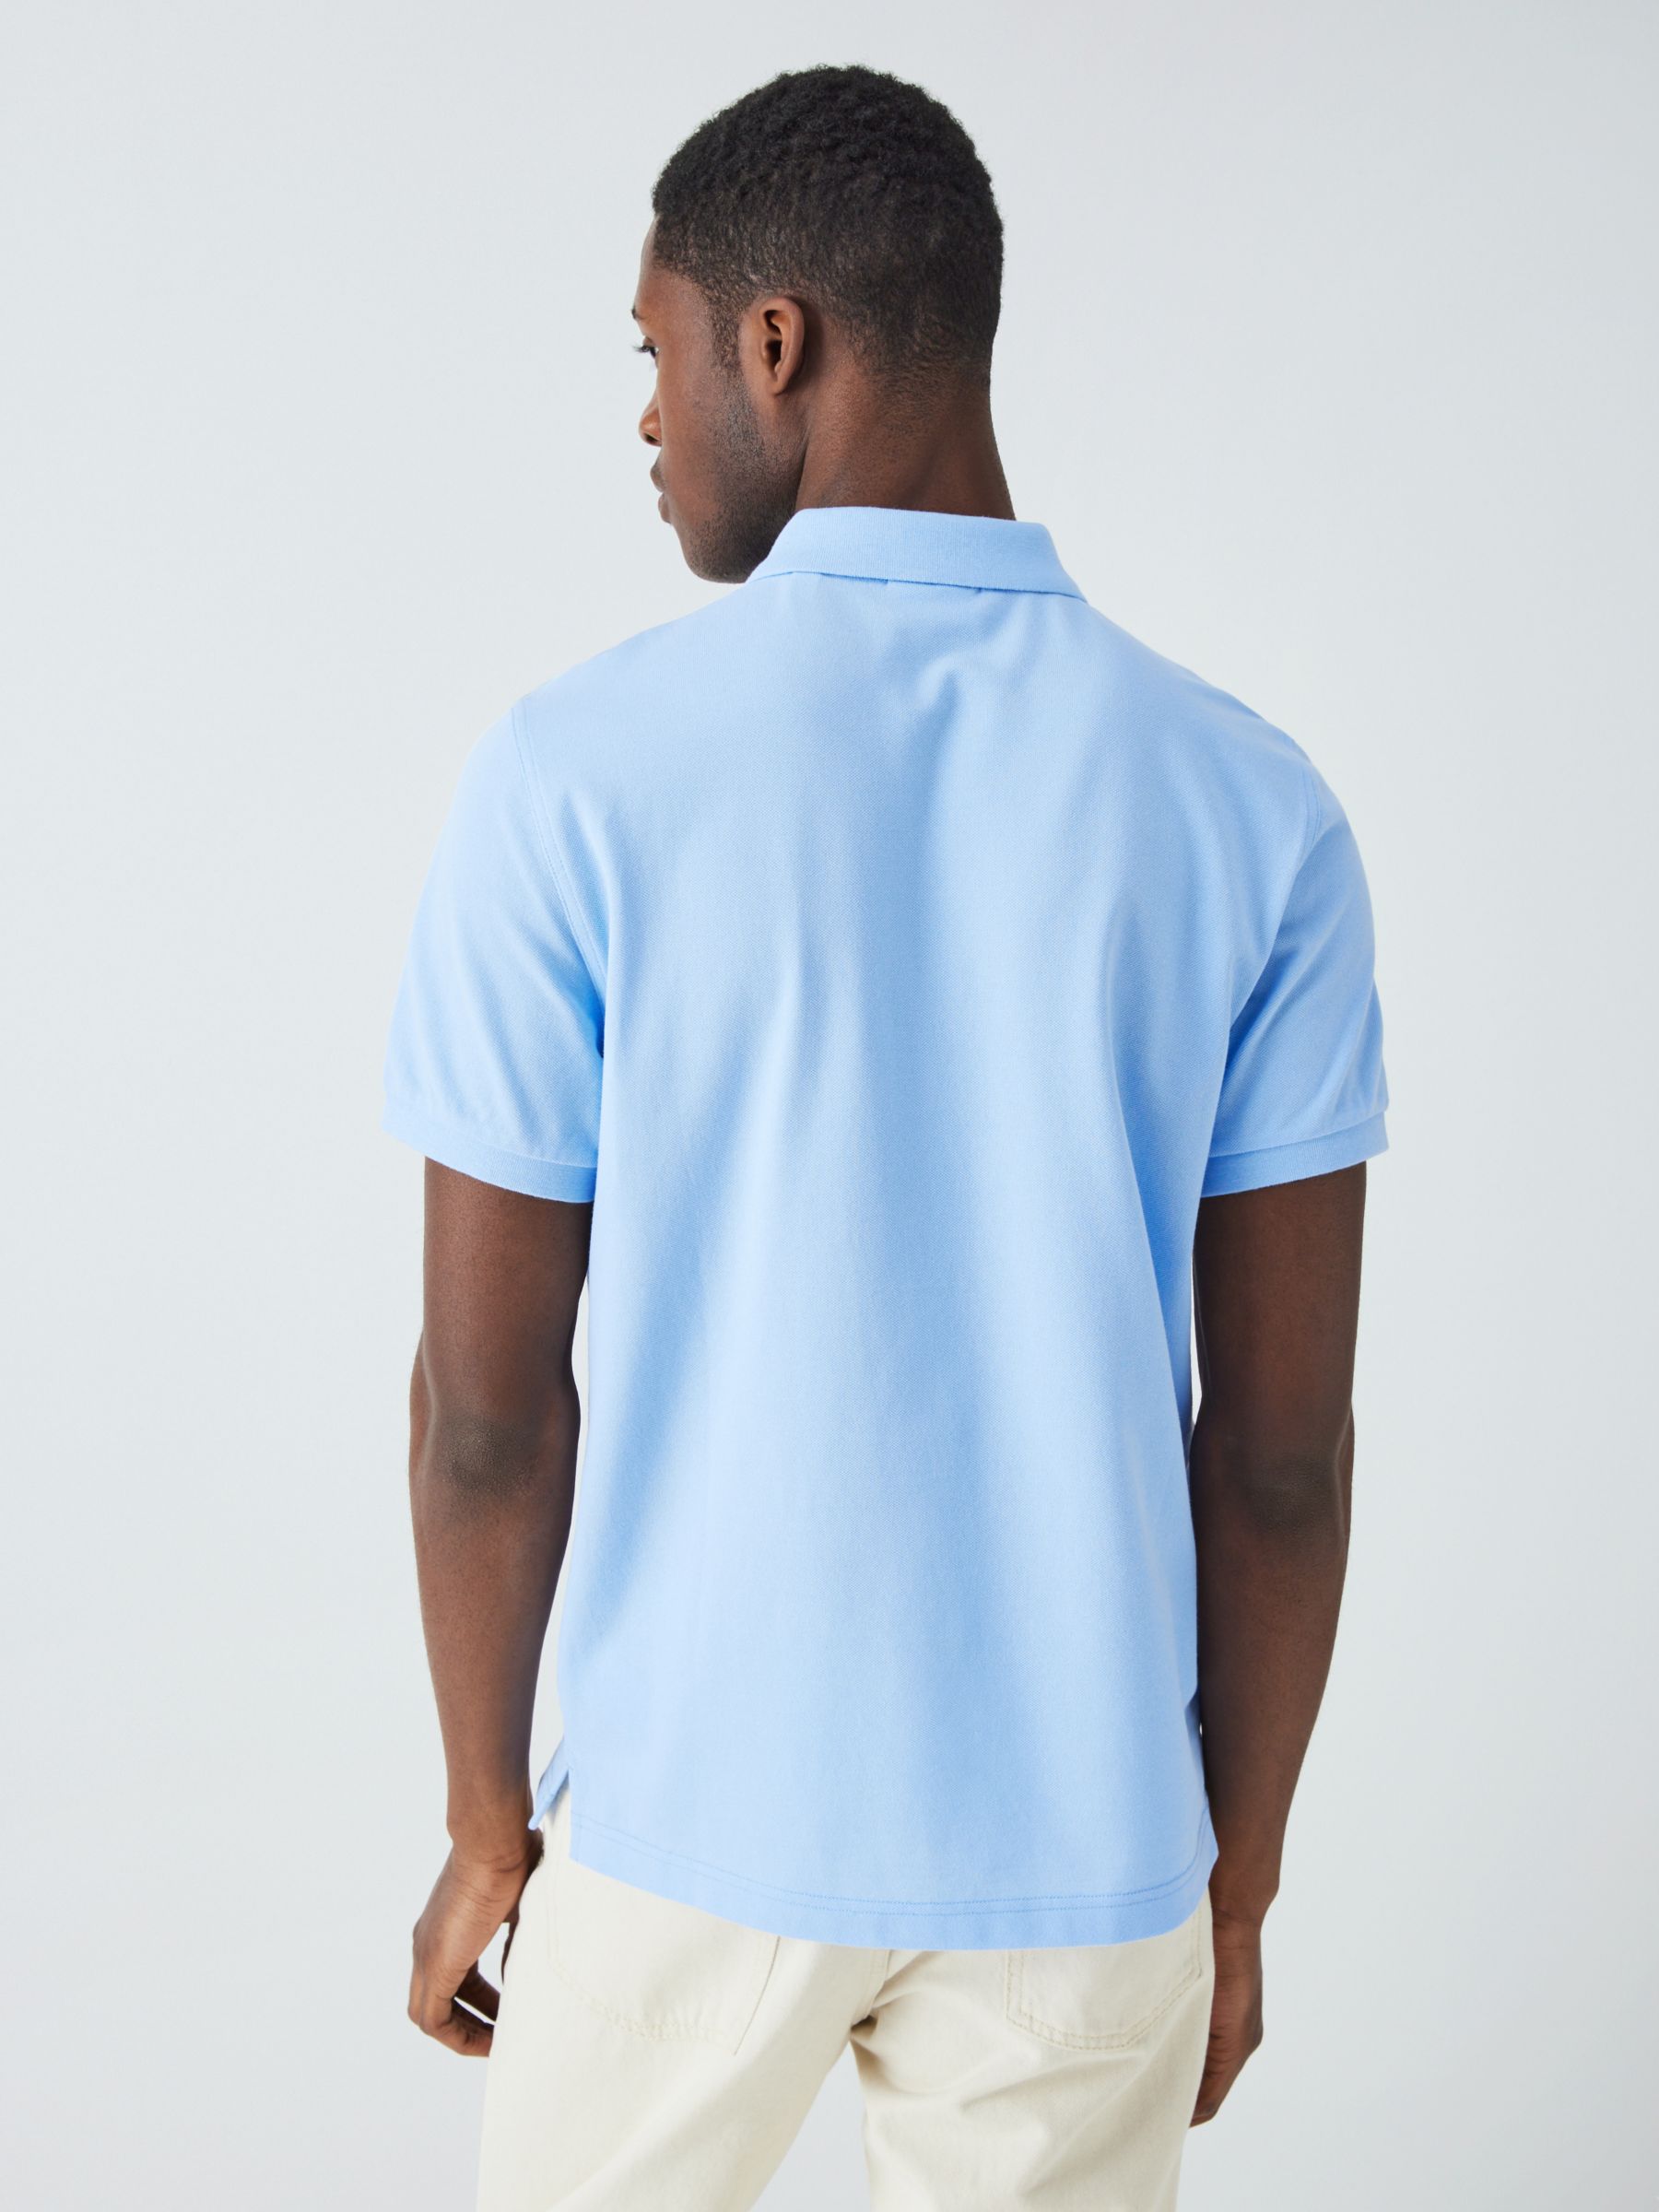 GANT Piqué Shield Short Sleeve Polo Shirt, Blue at John Lewis & Partners